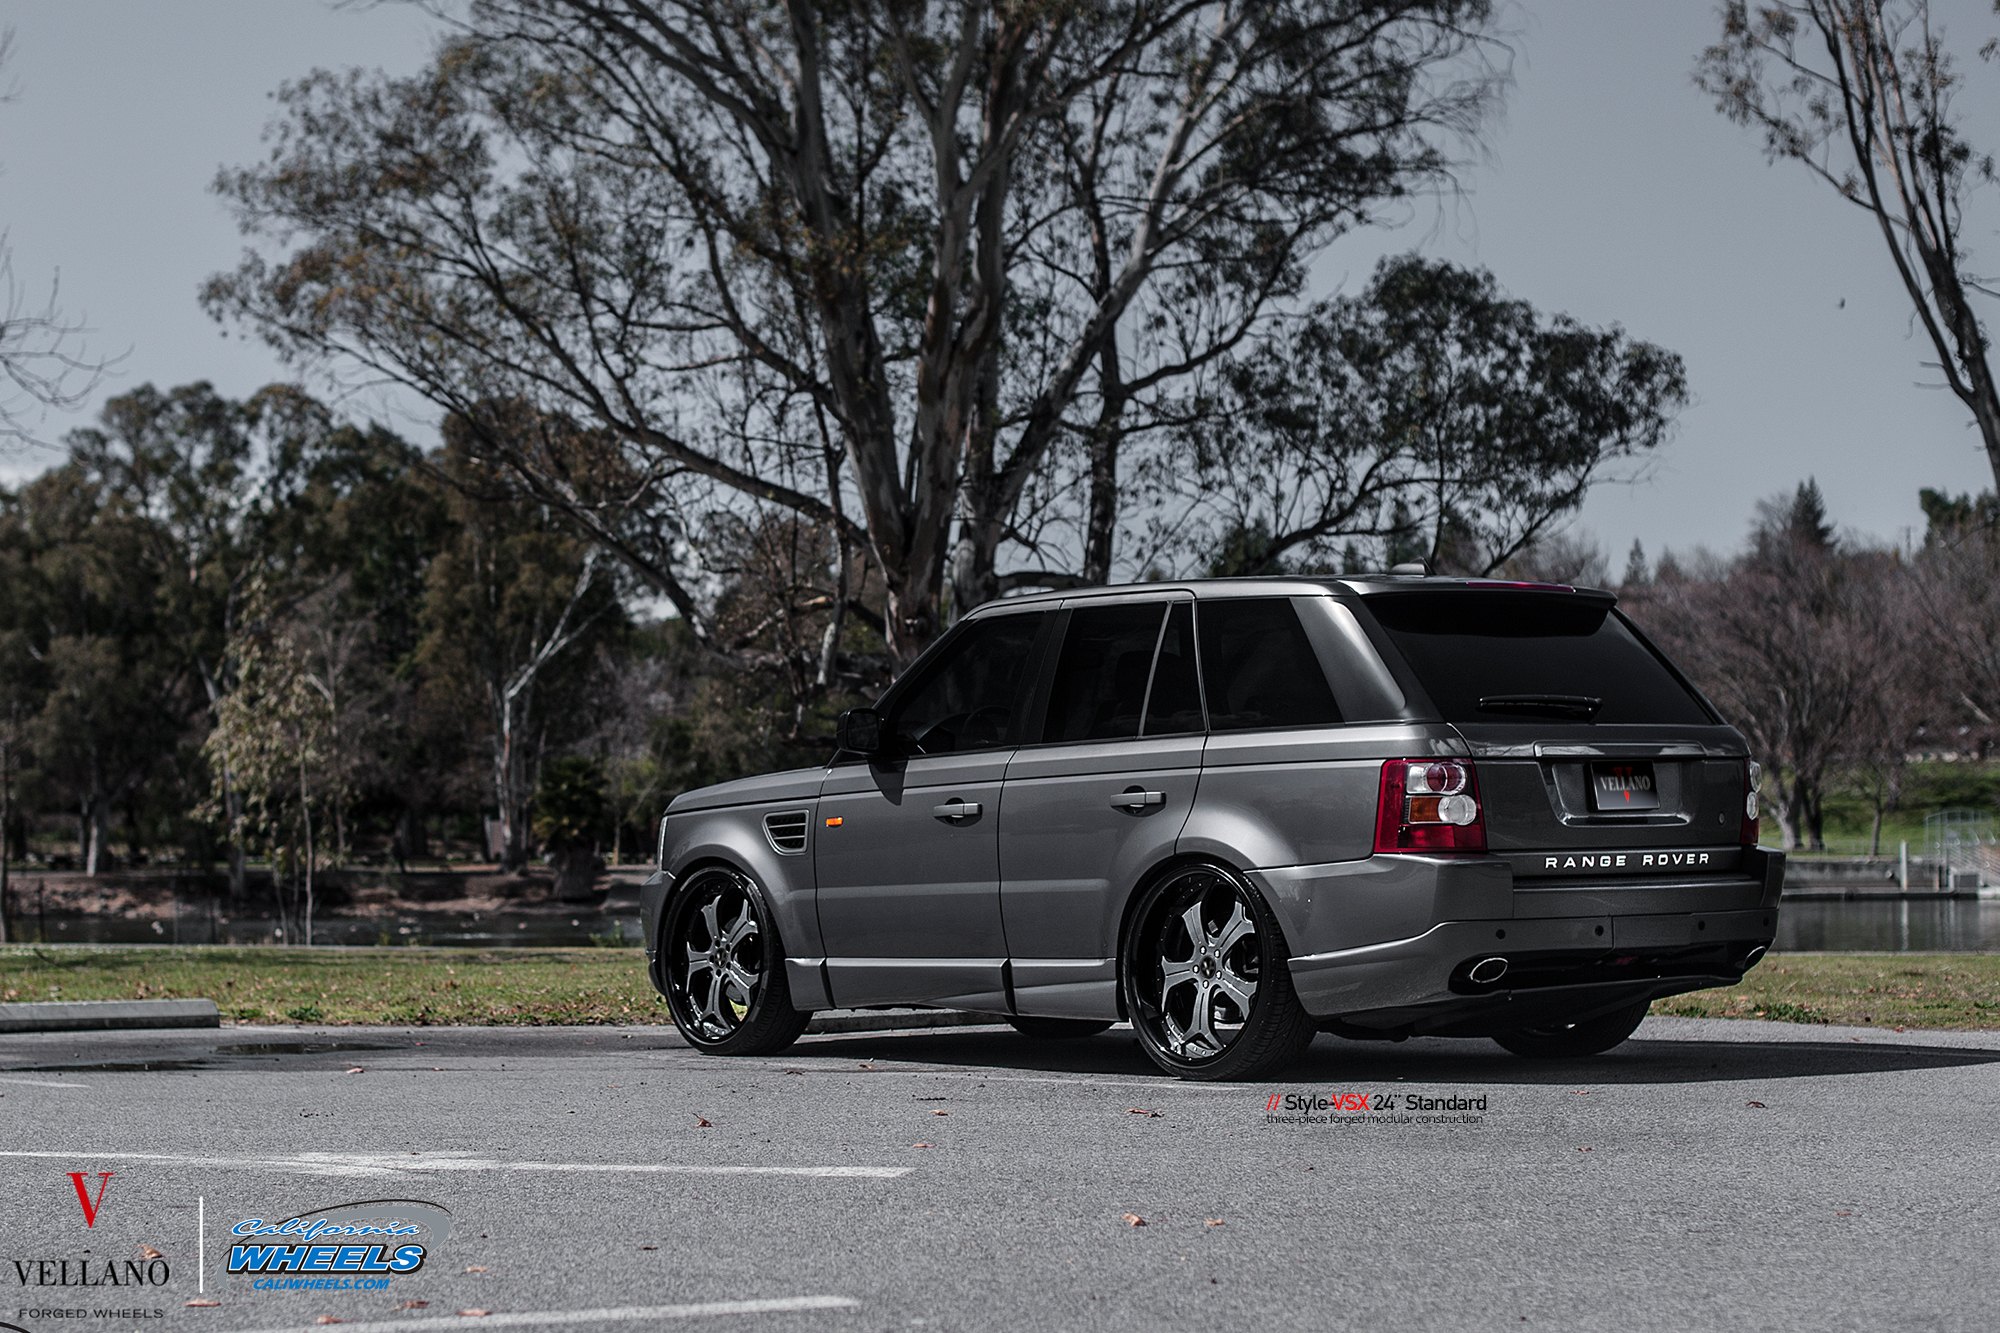 24 Inch Vellano Wheels on Gray Range Rover Sport - Photo by Vellano